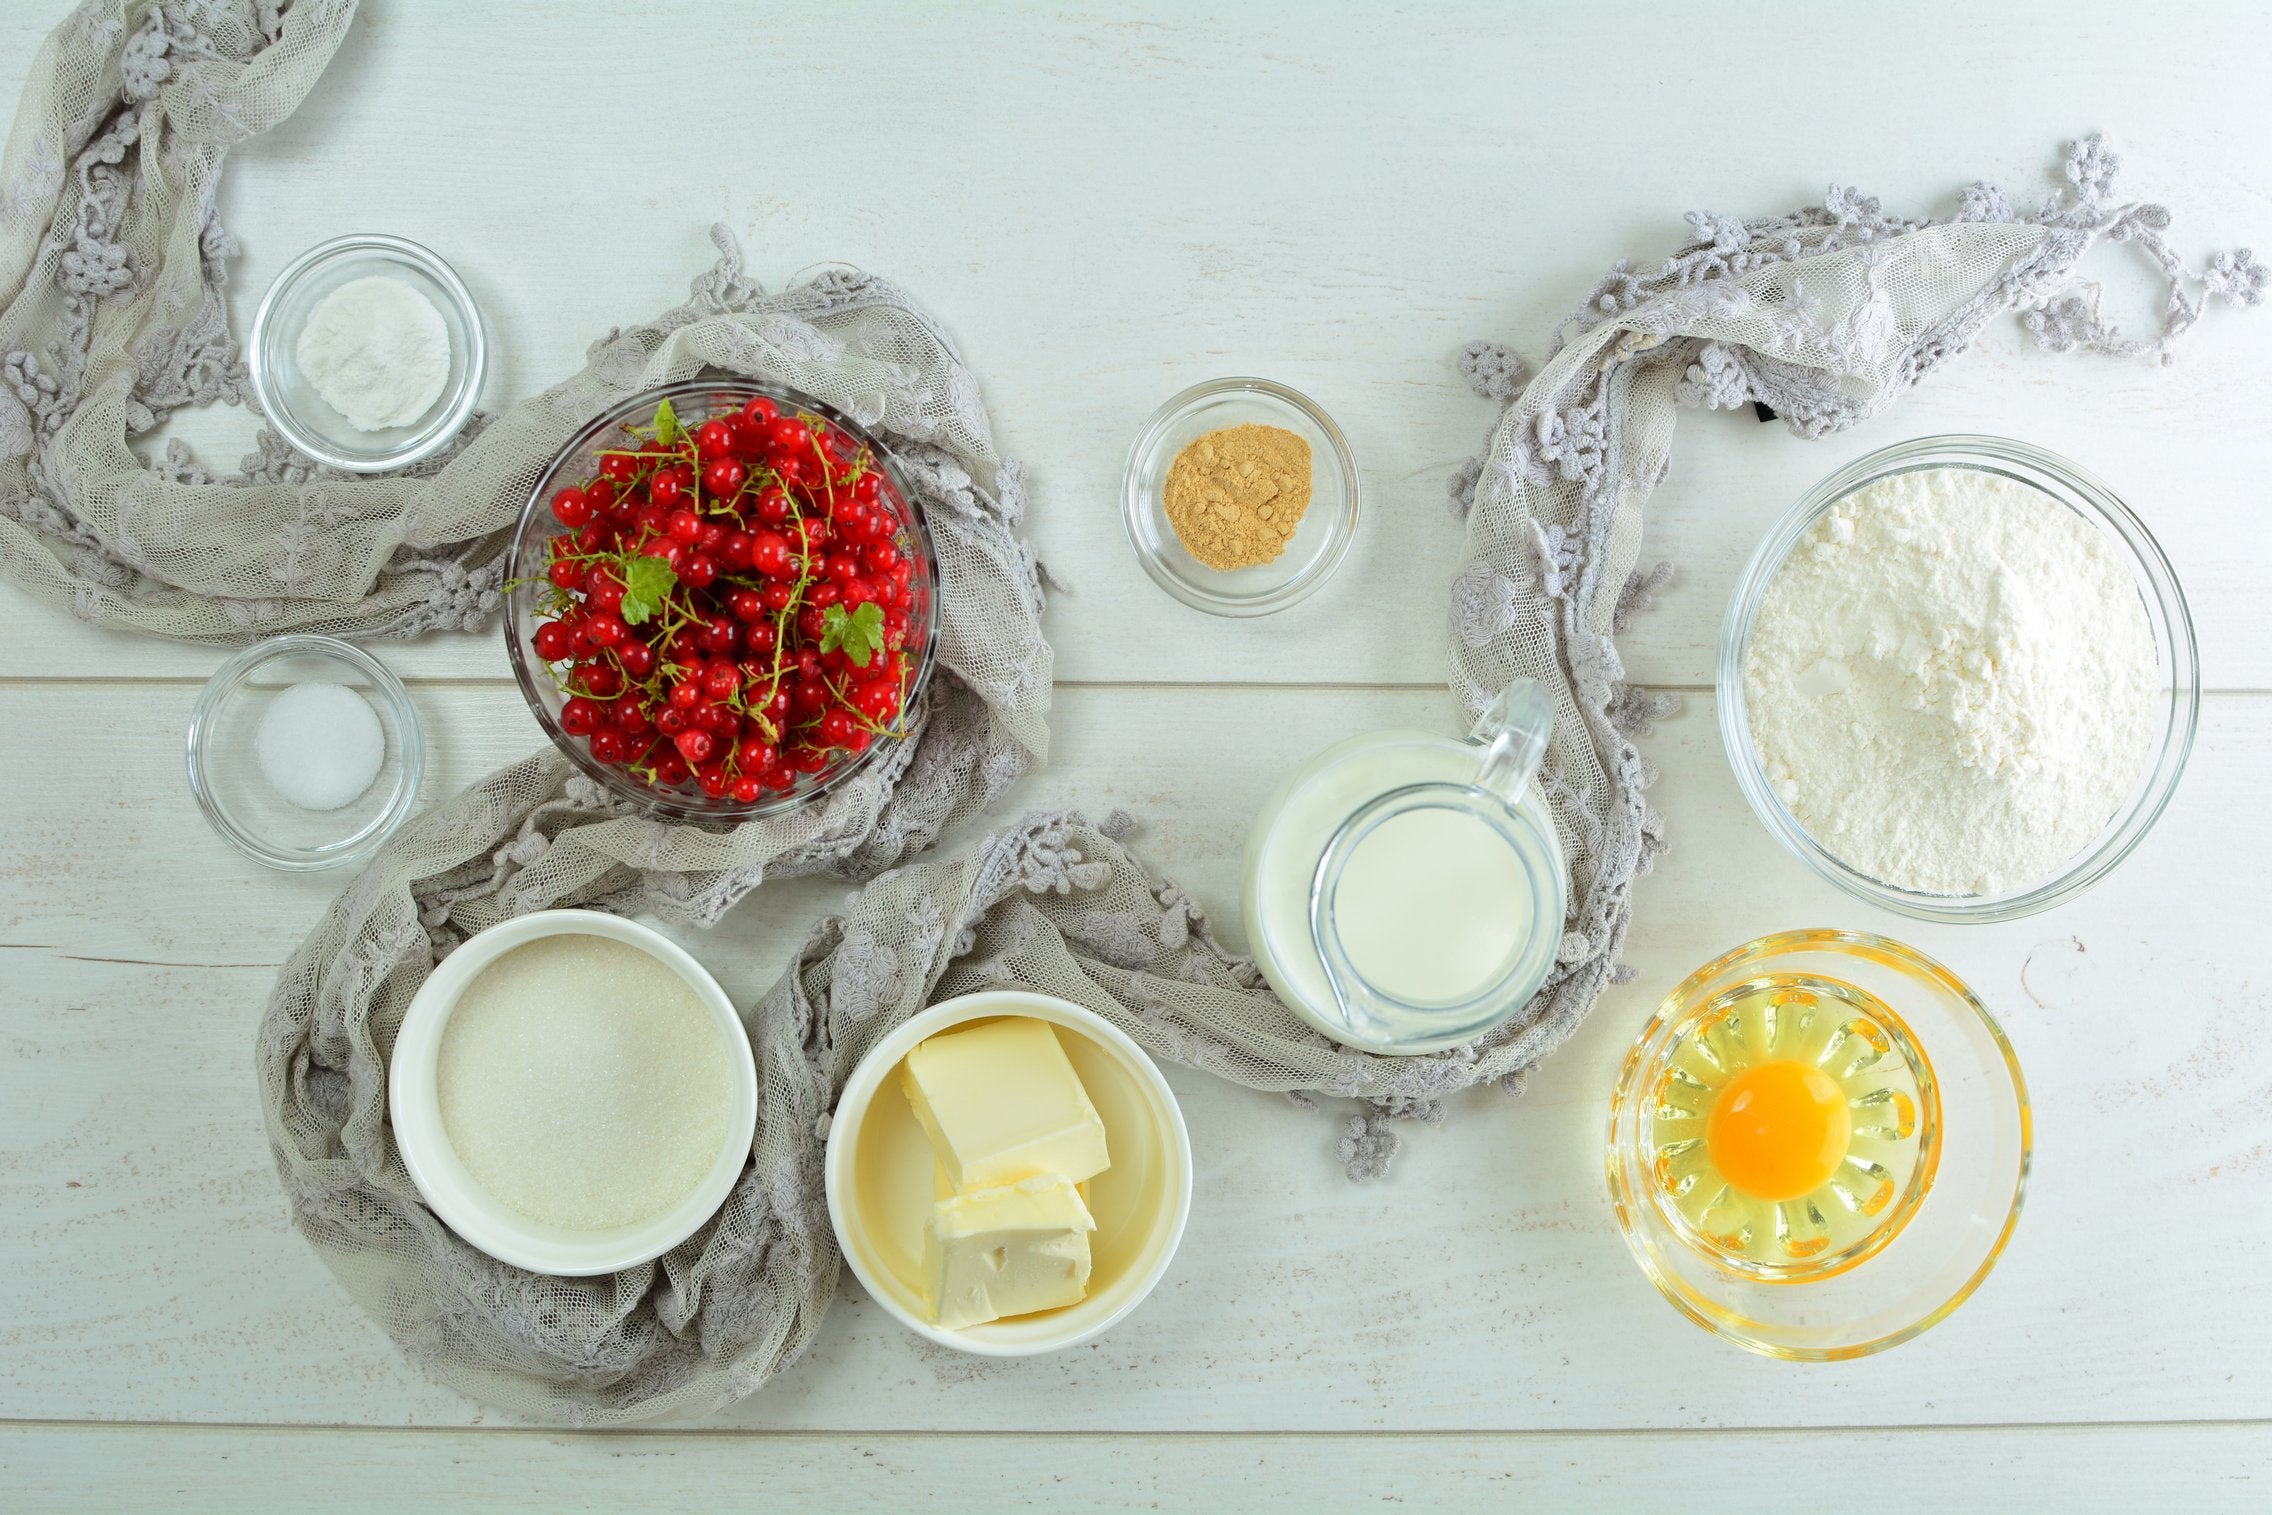 Ingredients - Oven Baked Maca Pancake with Berries